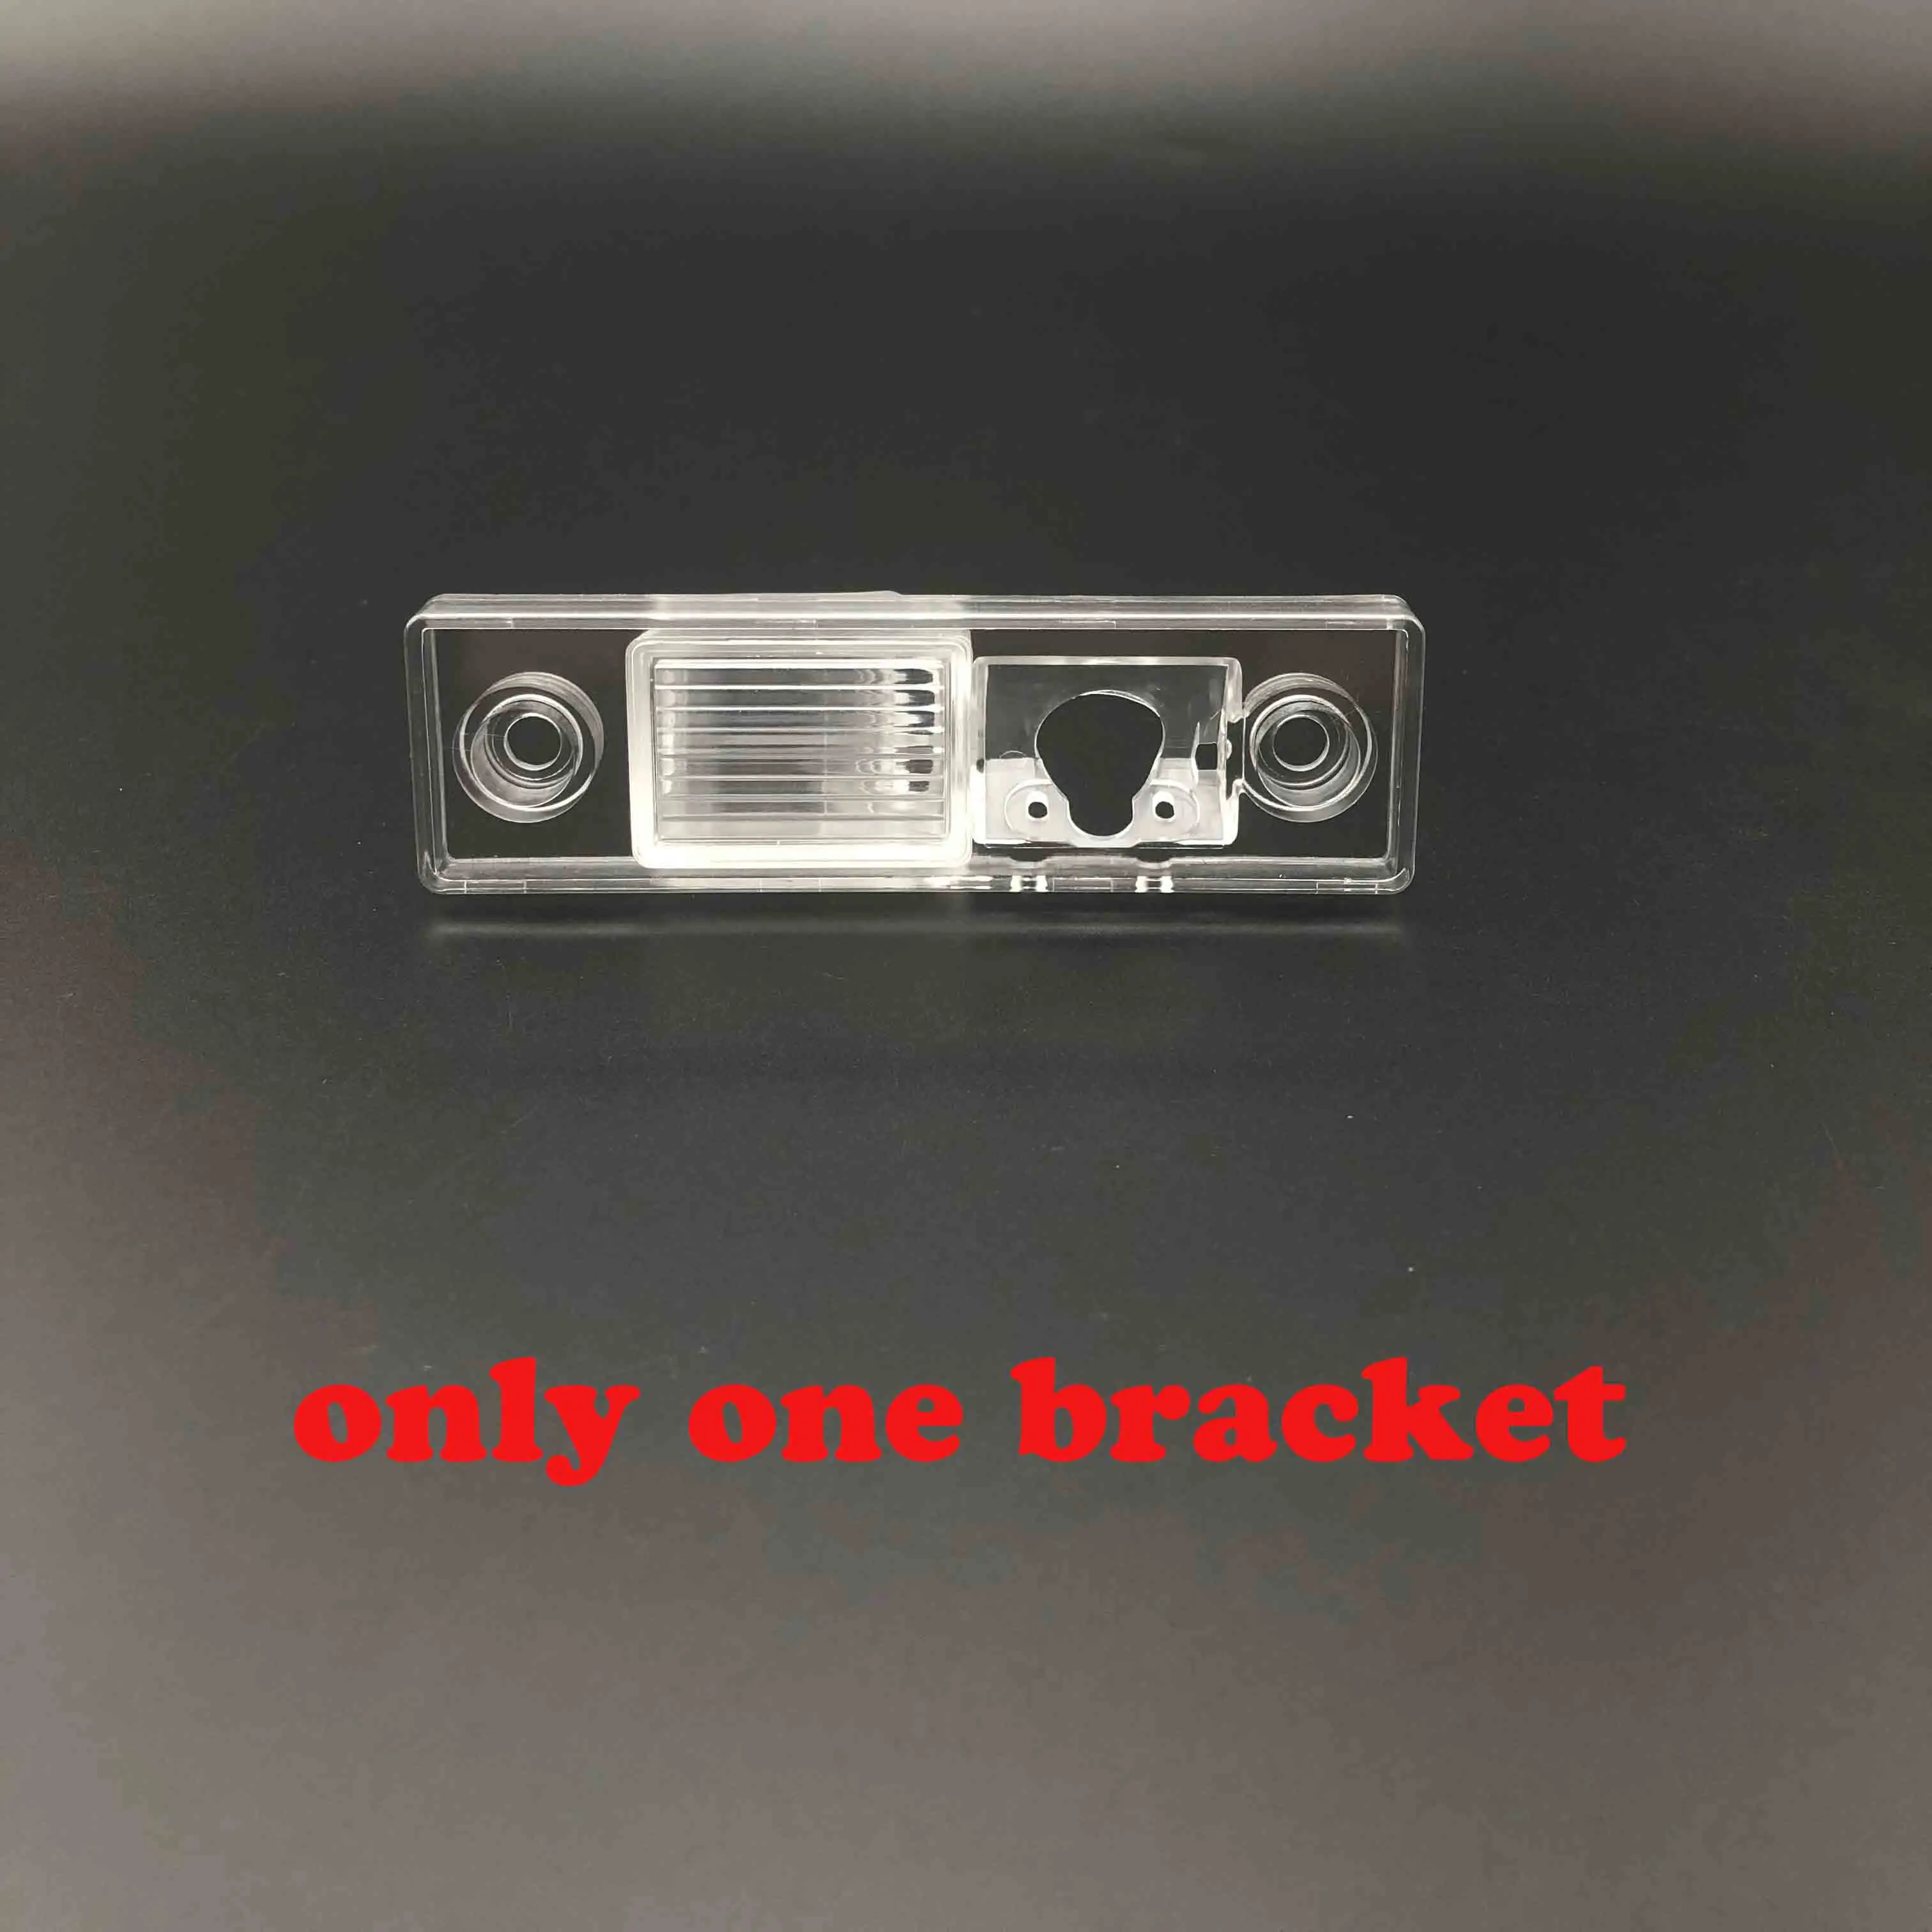 AUTONET HD ночного видения резервная камера заднего вида или кронштейн для Chevrolet Nabira Daewoo Lacetti 5D wagon/камера номерного знака - Название цвета: only one bracket